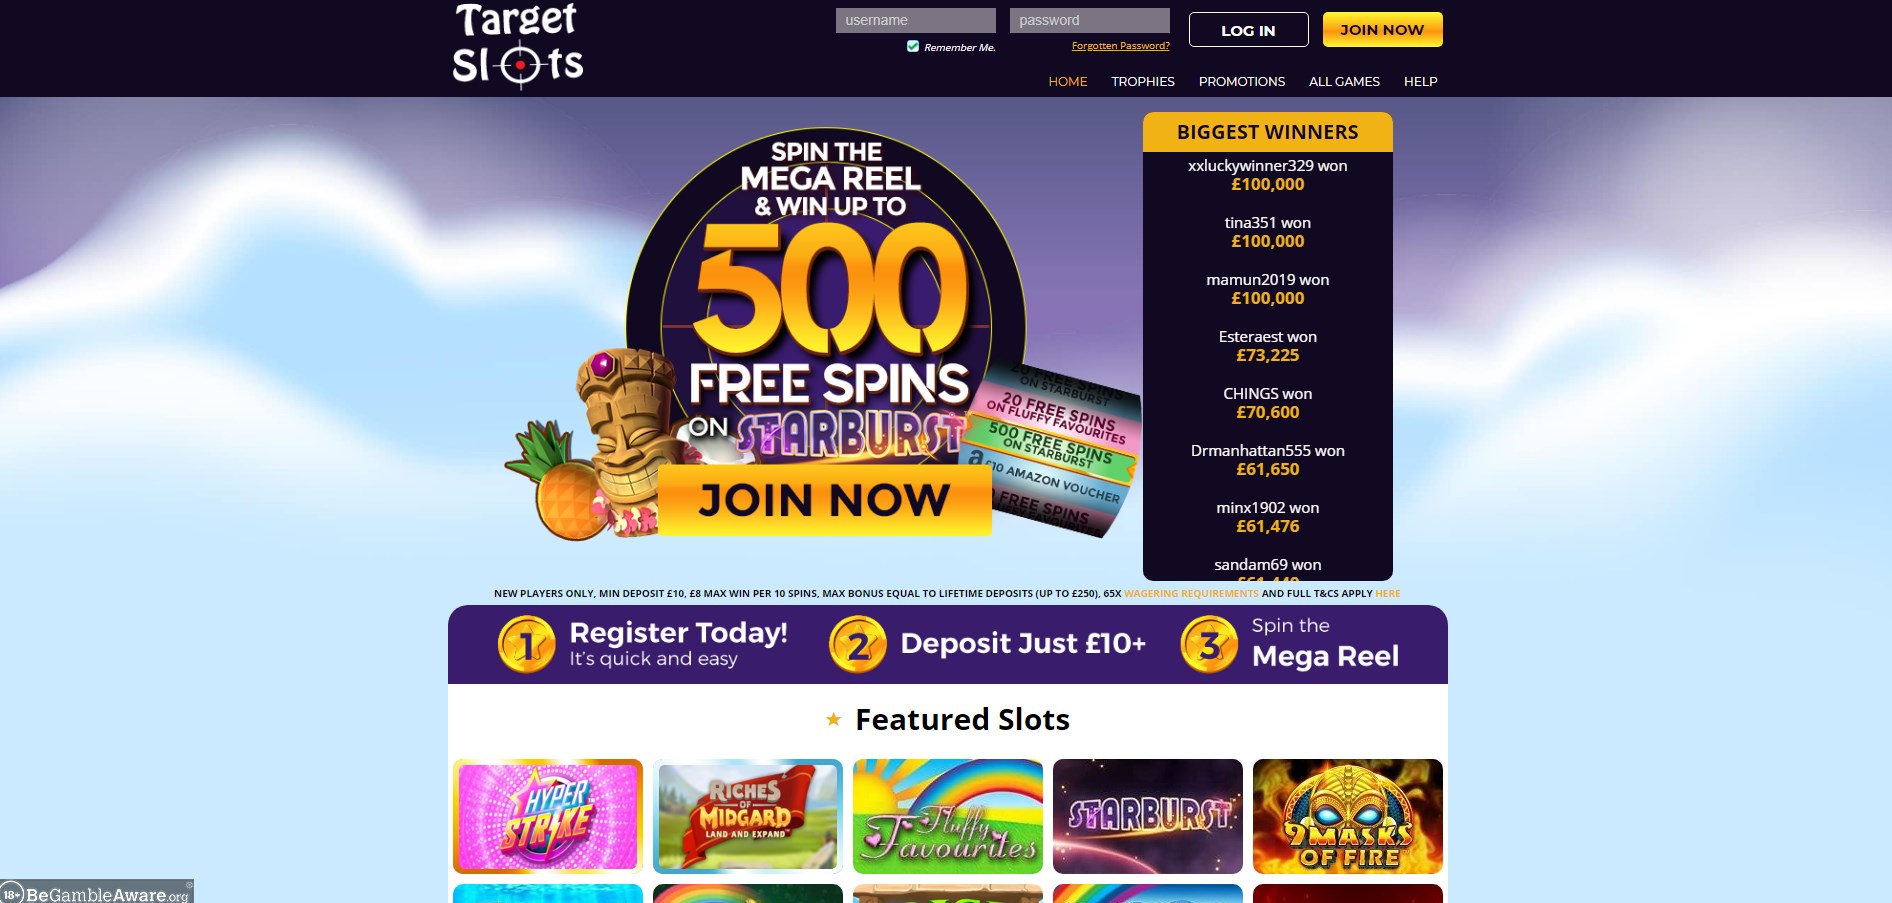 Target Slots Casino Review